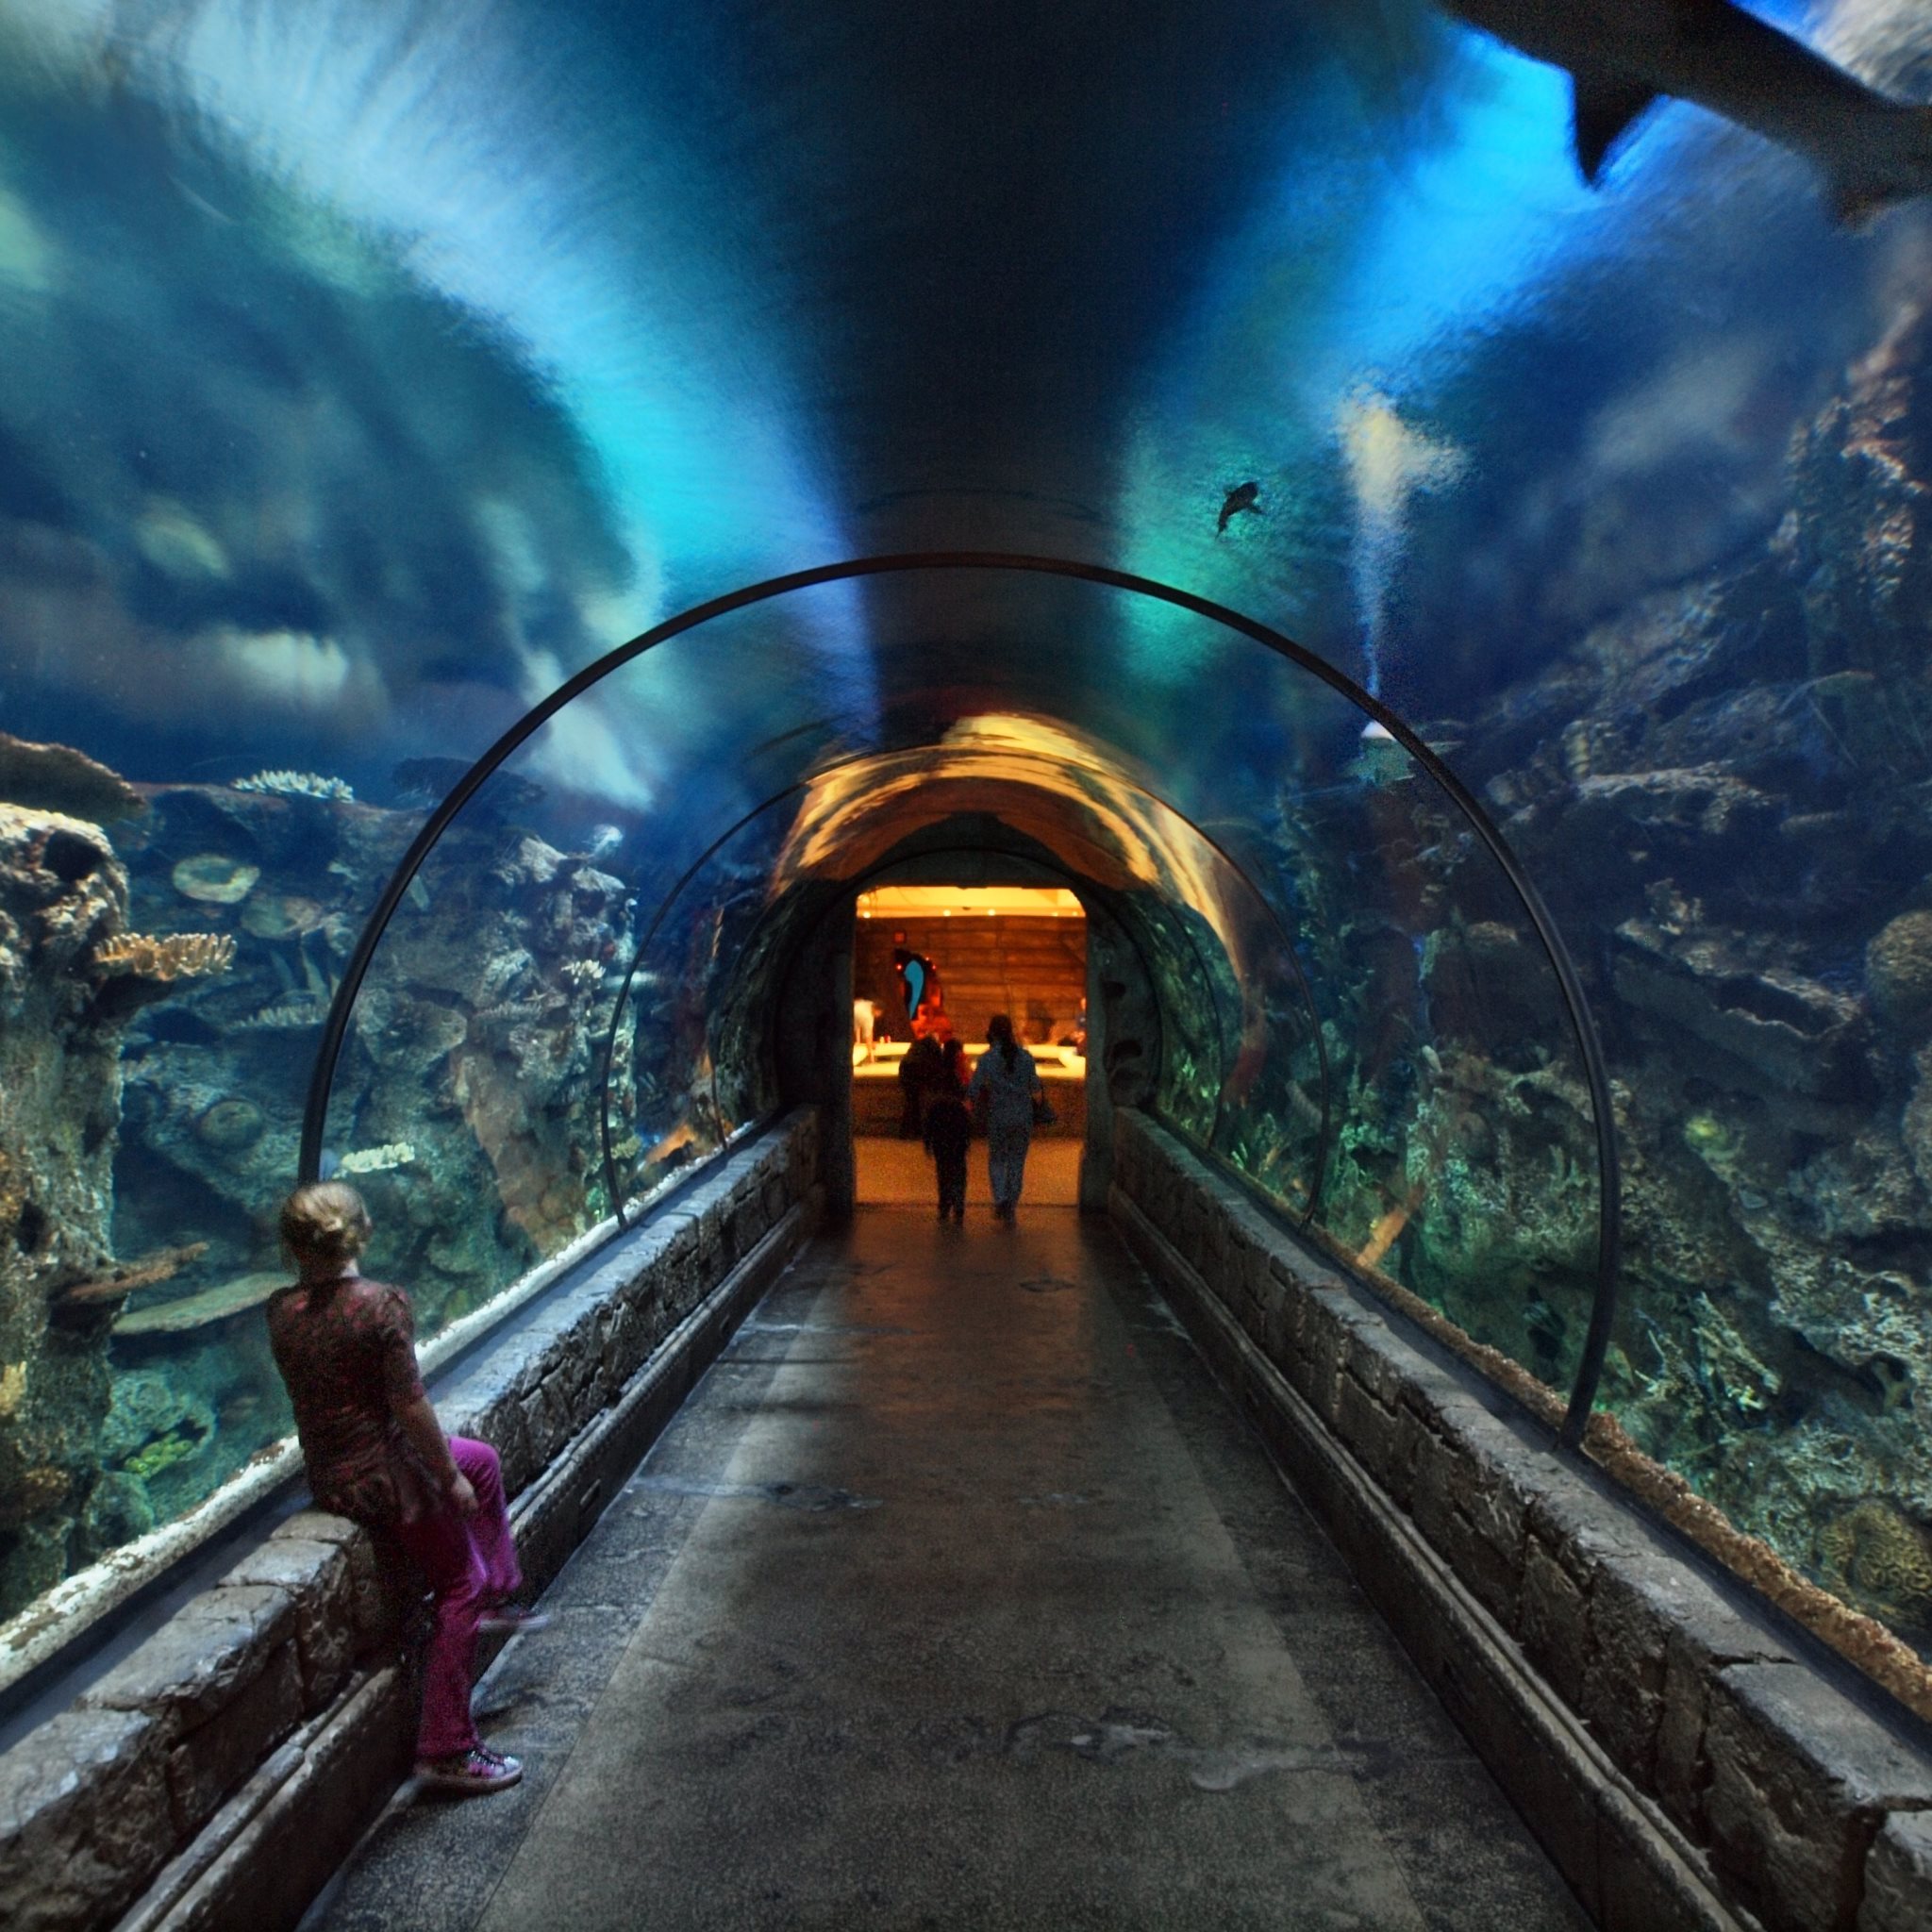 Underwater Passage Mandalay Bay hotel in Las Vegas for iPad: 2048x2048 ...